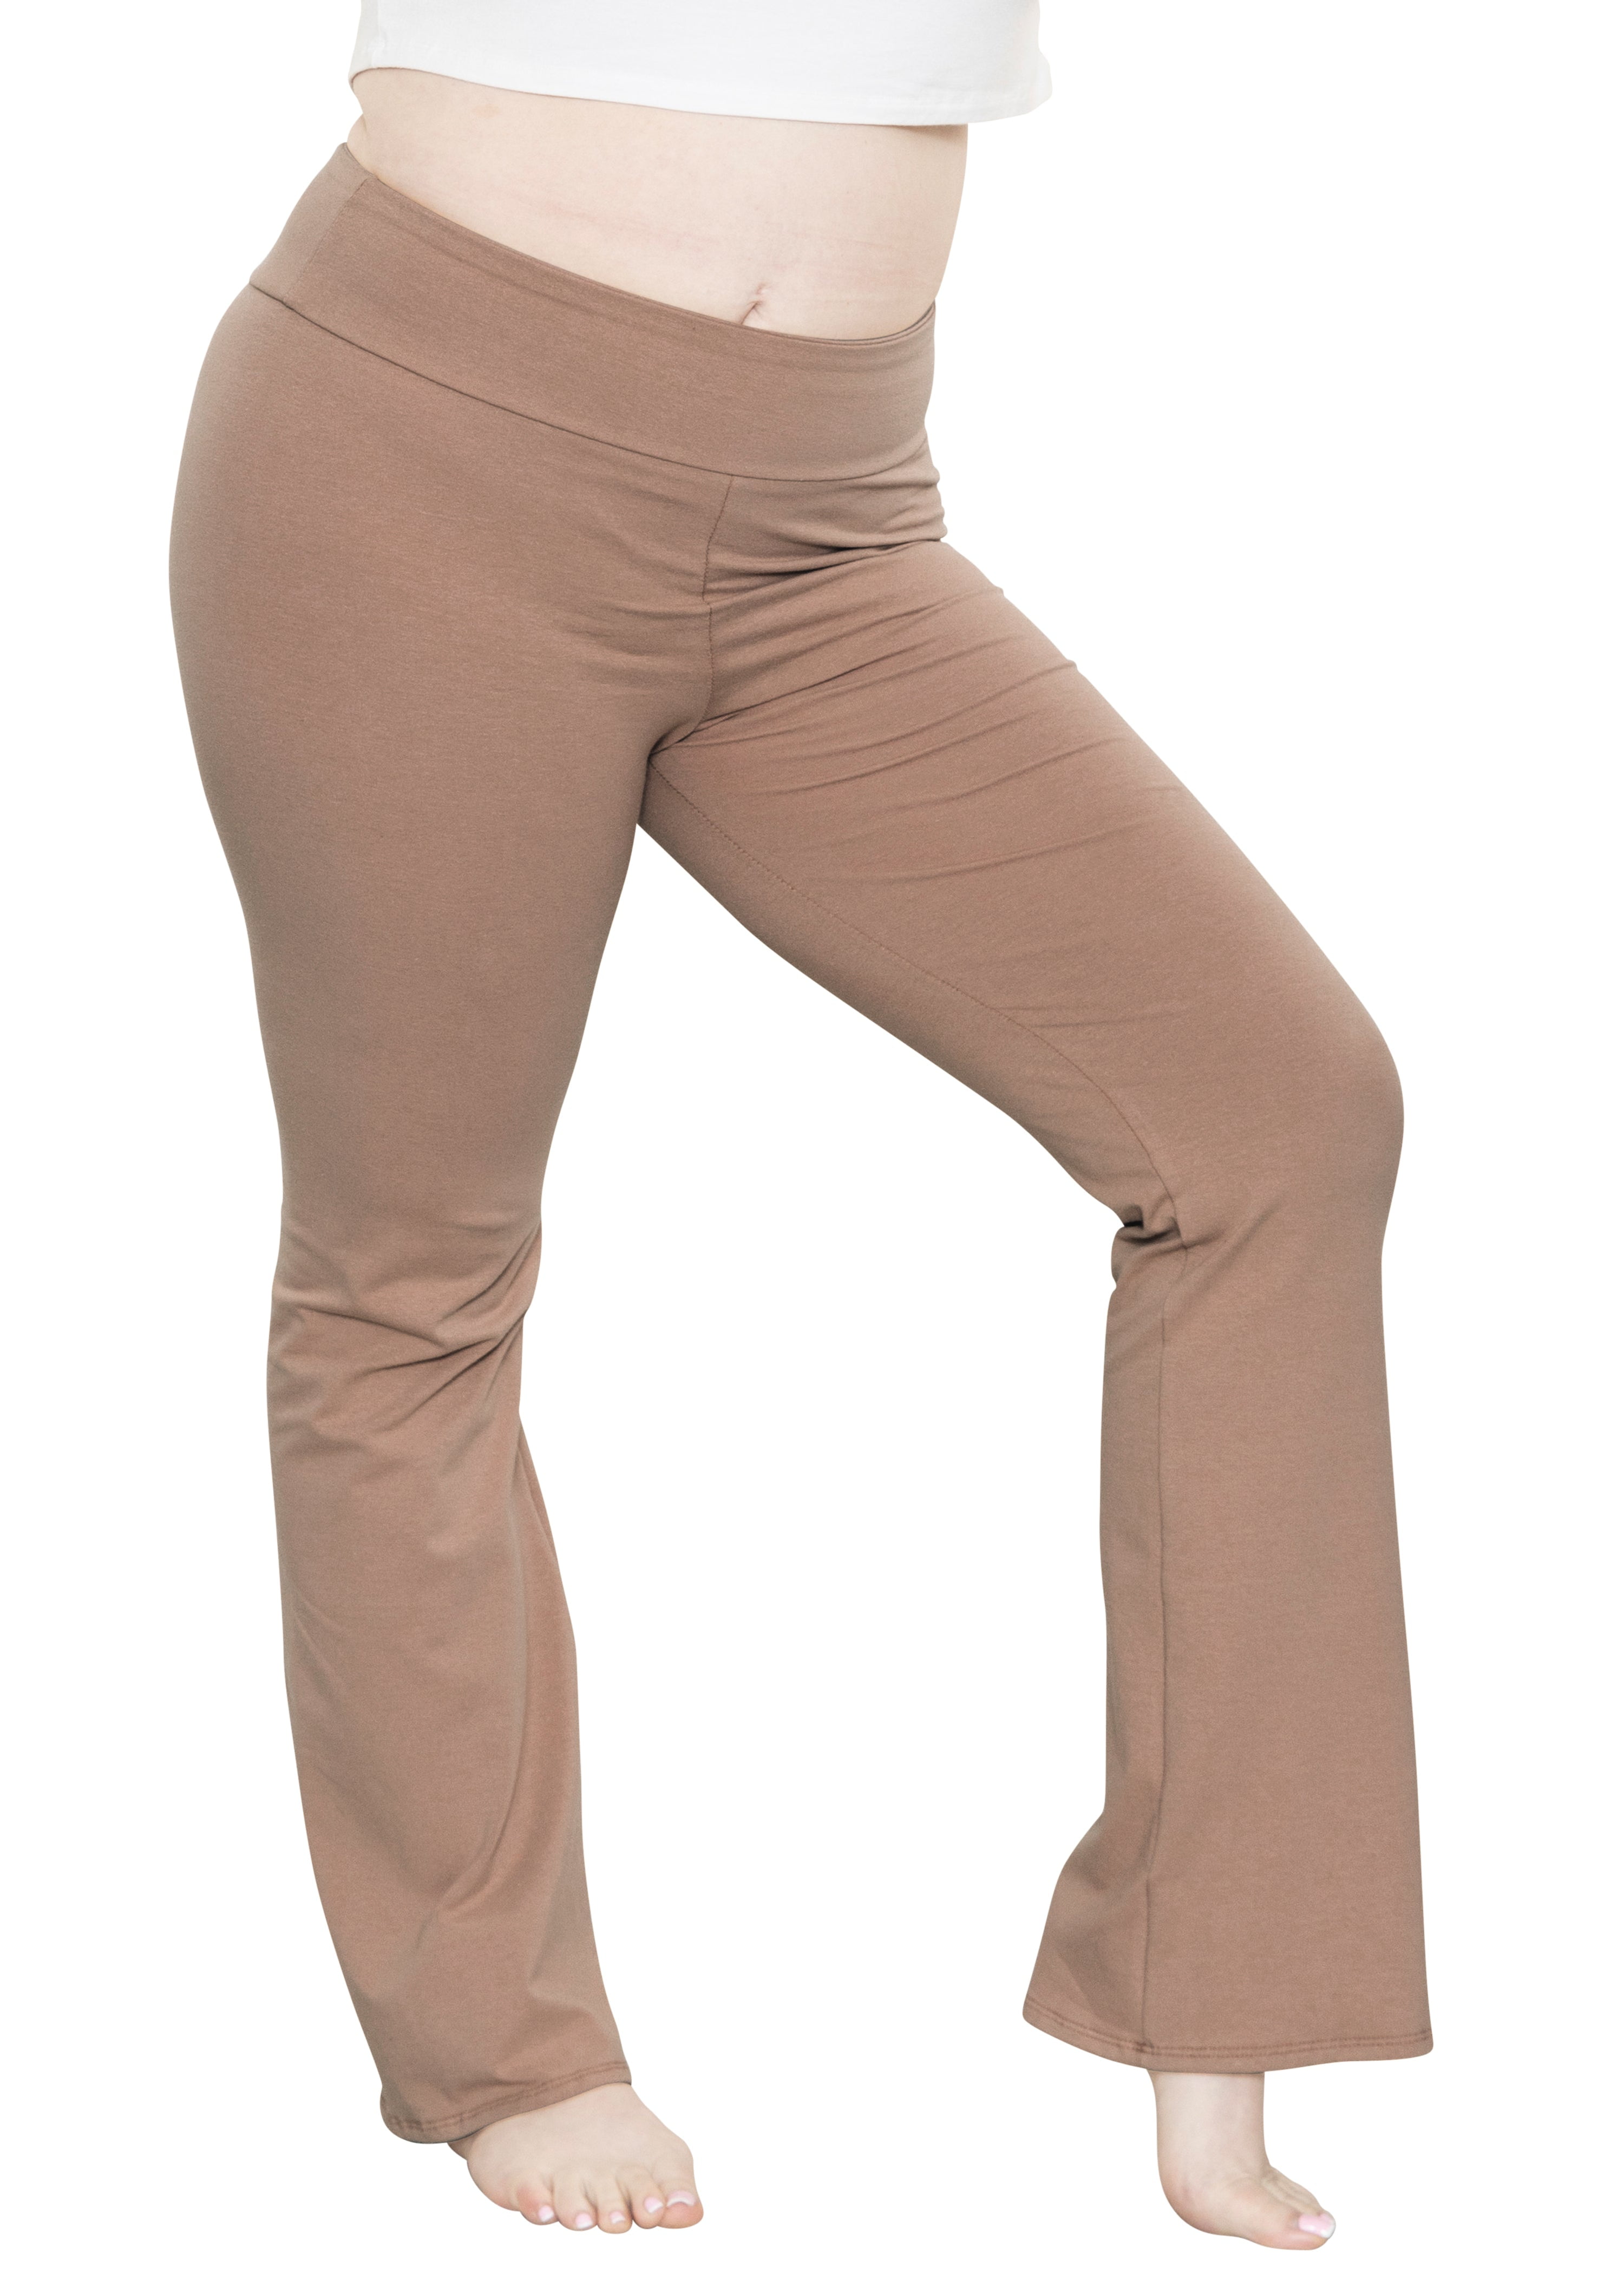 RBX Active Women's Plus Size Boot Cut Fleece Lined Yoga Pants with Pocket 